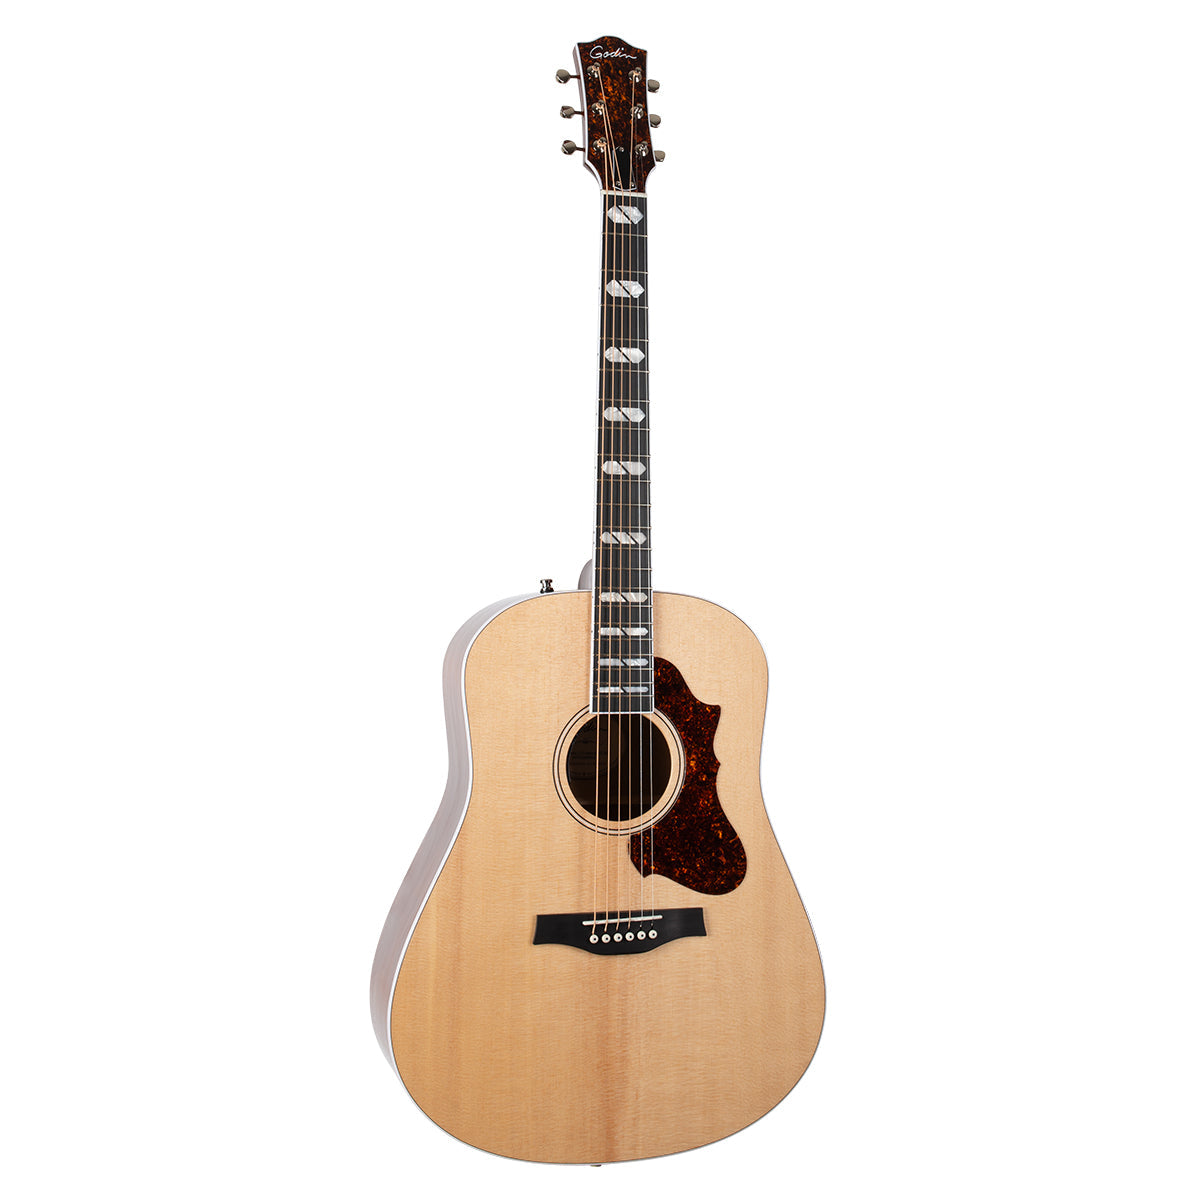 Godin Metropolis LTD HG Electro-Acoustic Guitar with Bag ~ Natural,  for sale at Richards Guitars.